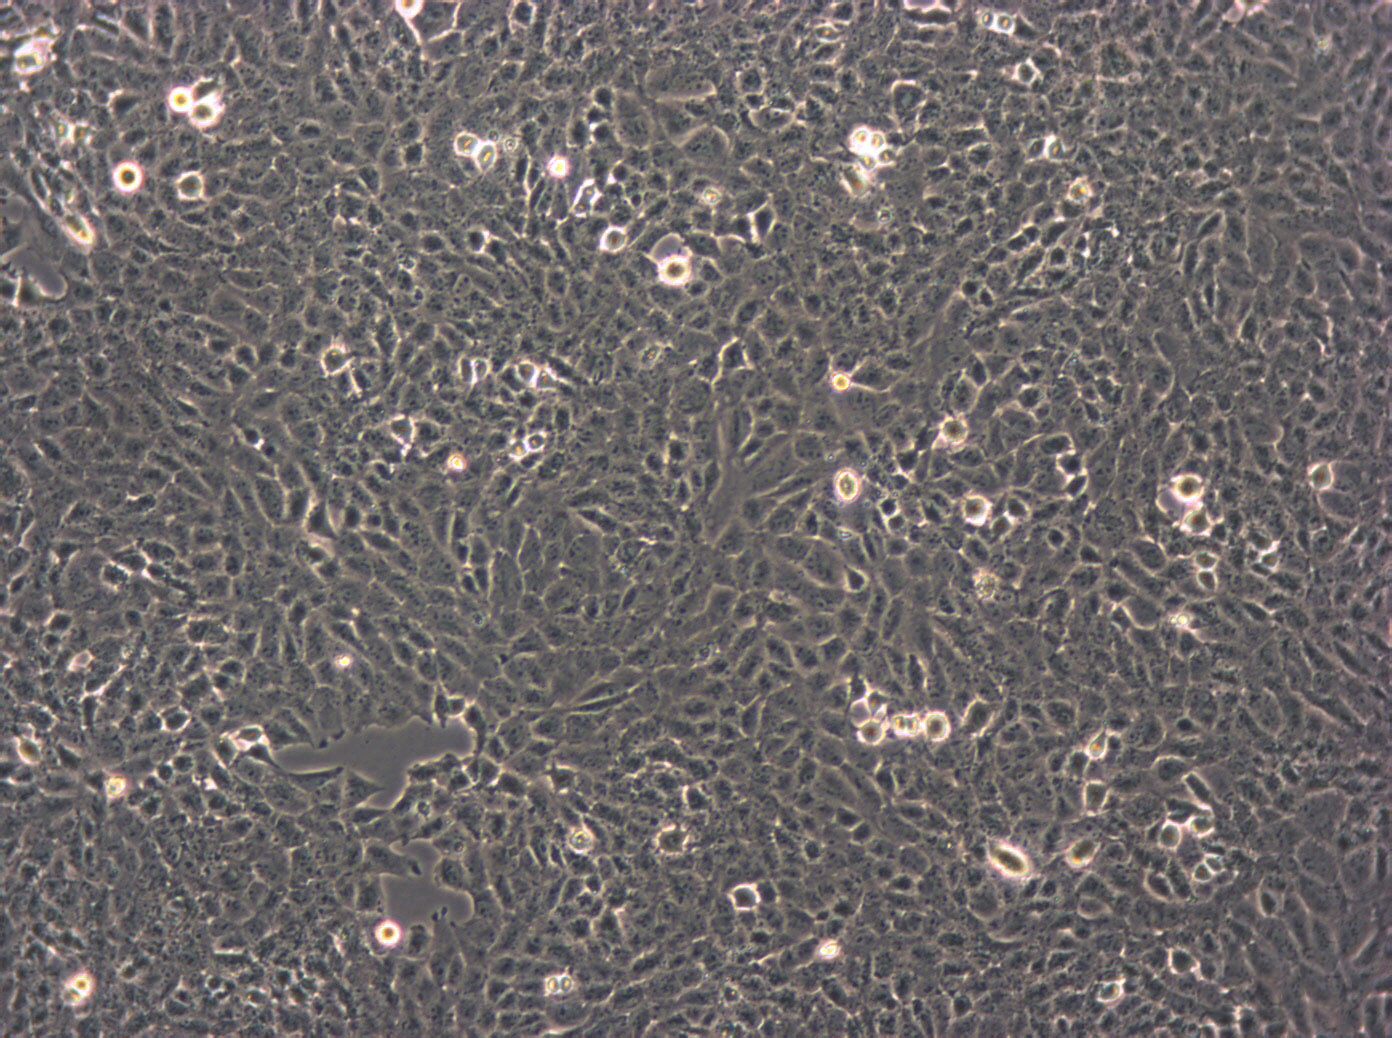 PC-2 [Human pancreatic carcinoma] Cell|人胰腺癌细胞